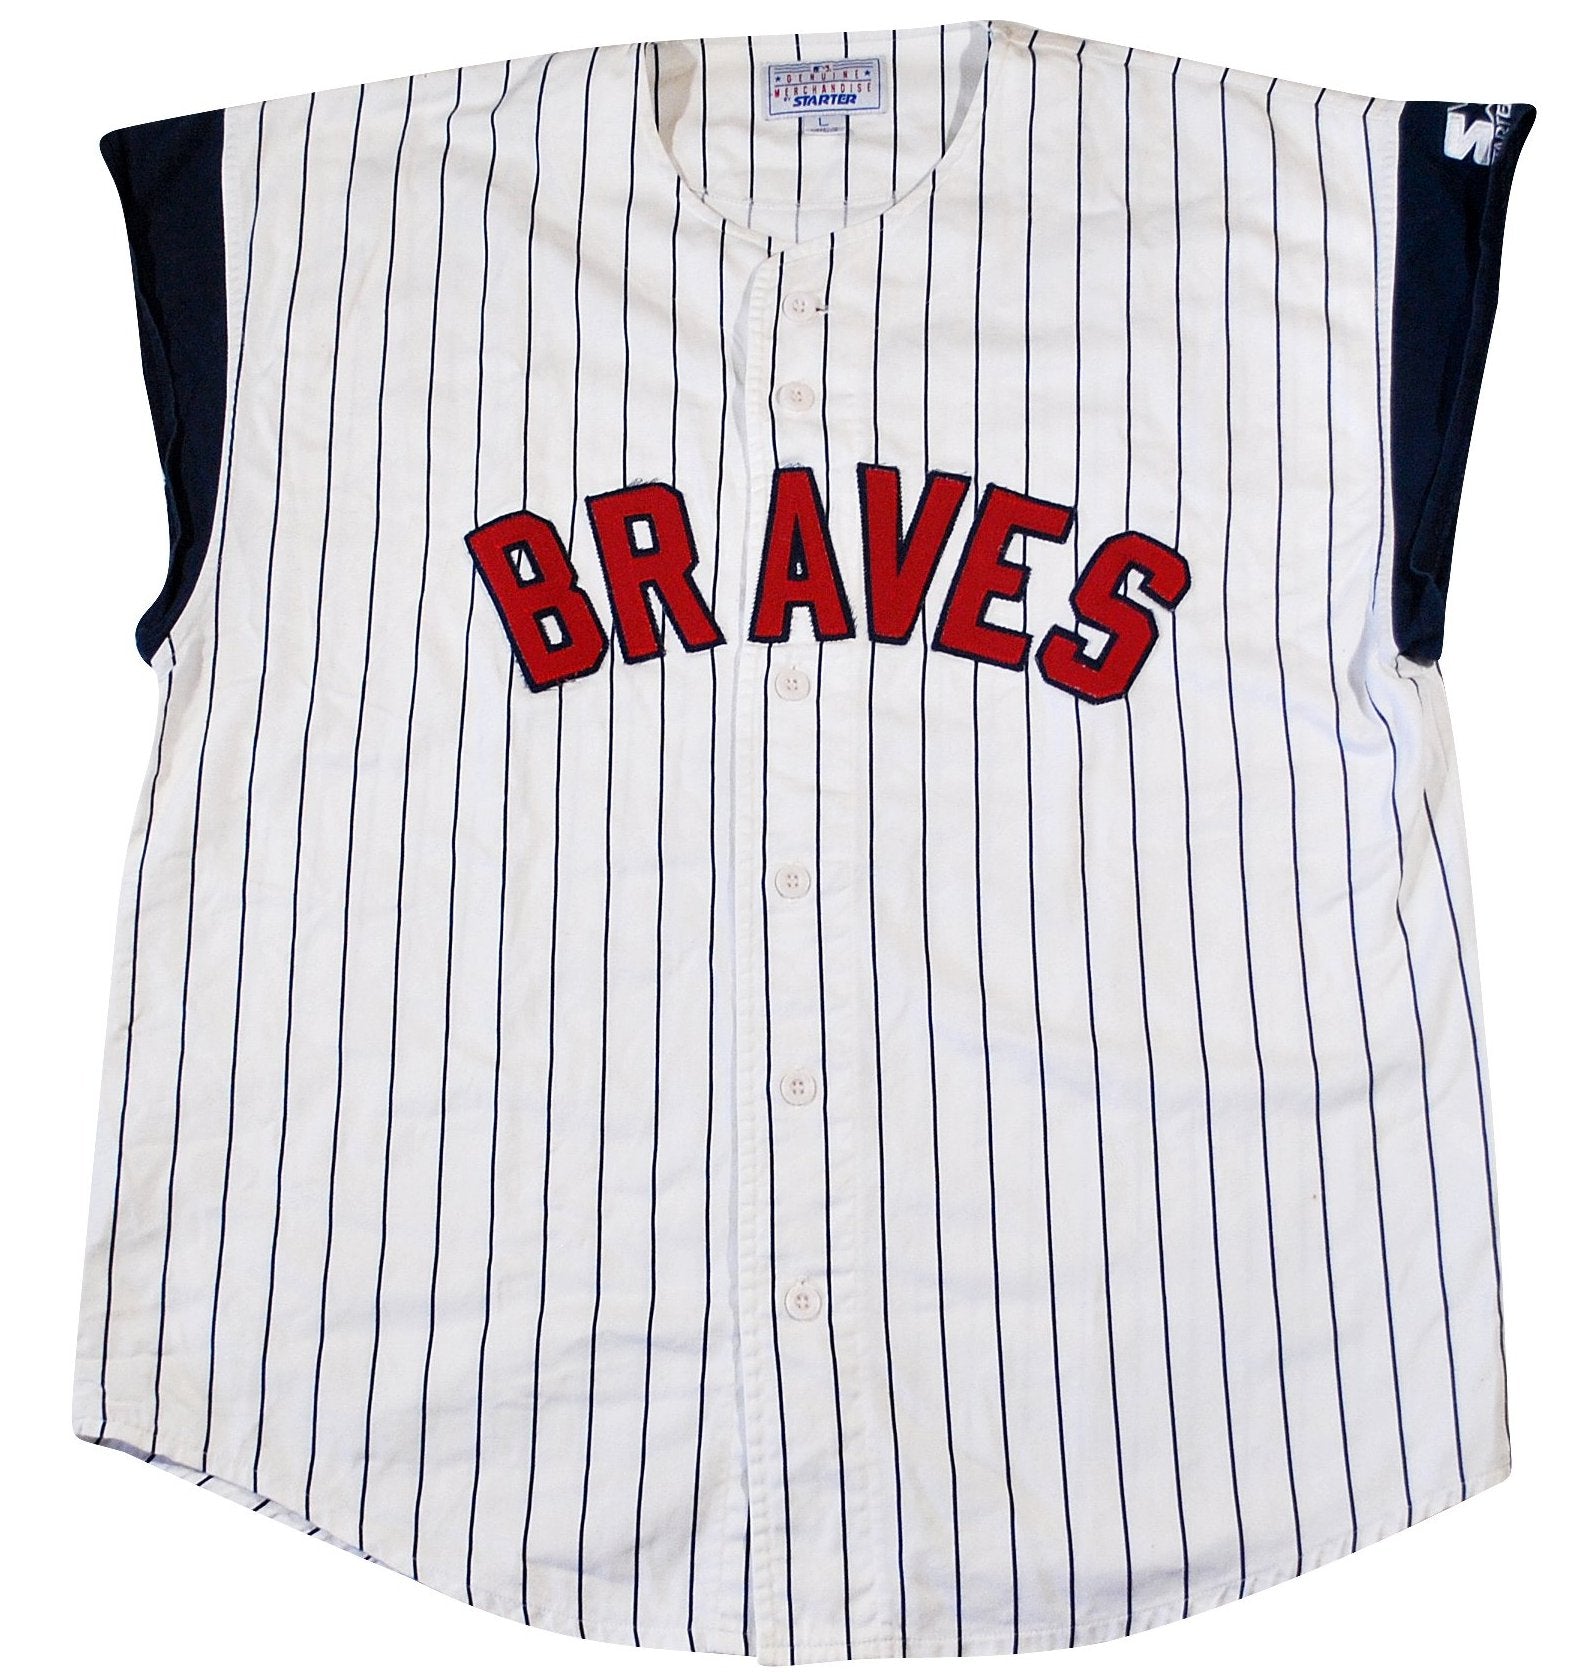 Atlanta Braves Merchandise, Jerseys, Apparel, Clothing